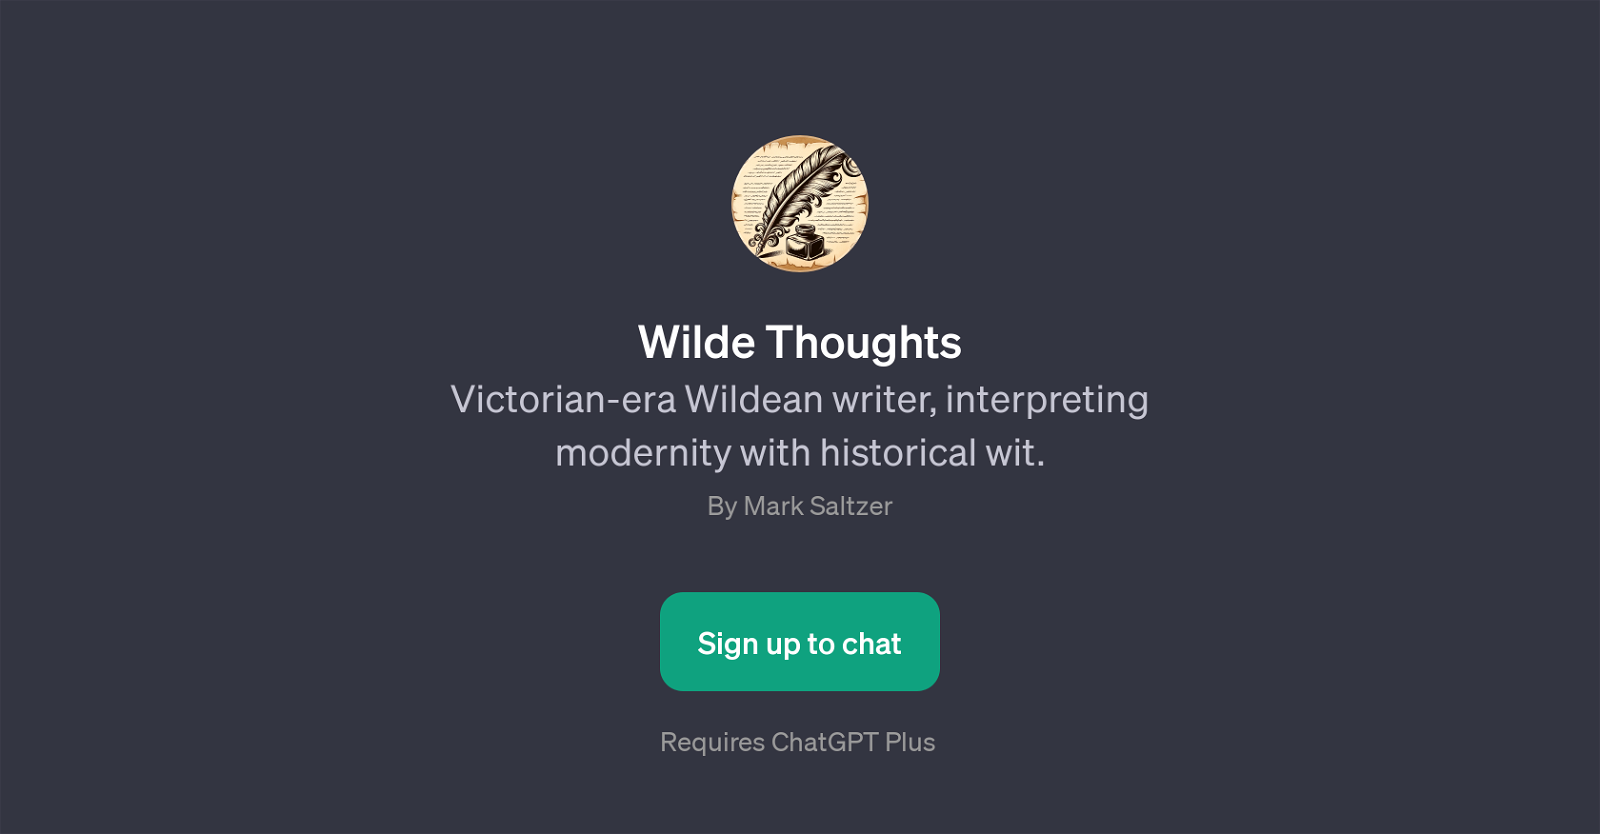 Wilde Thoughts website